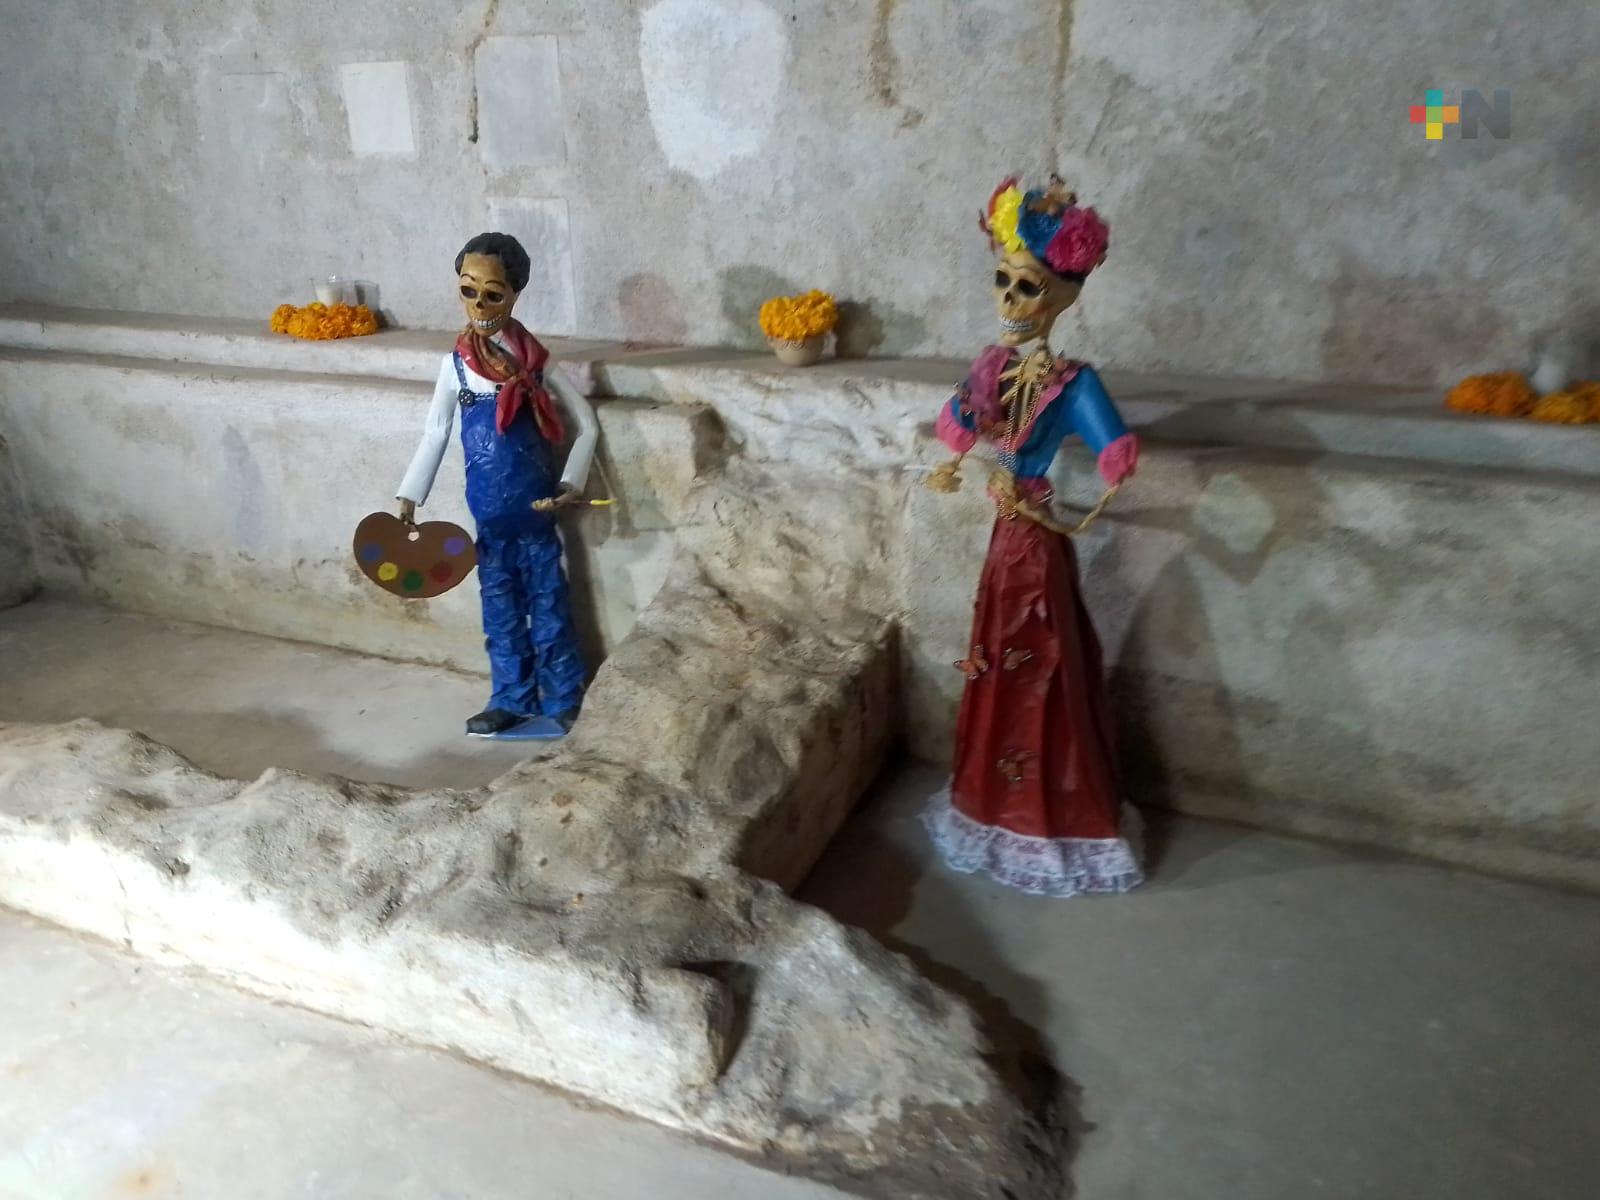 Un éxito la apertura de la cripta del exconvento Betlehemita